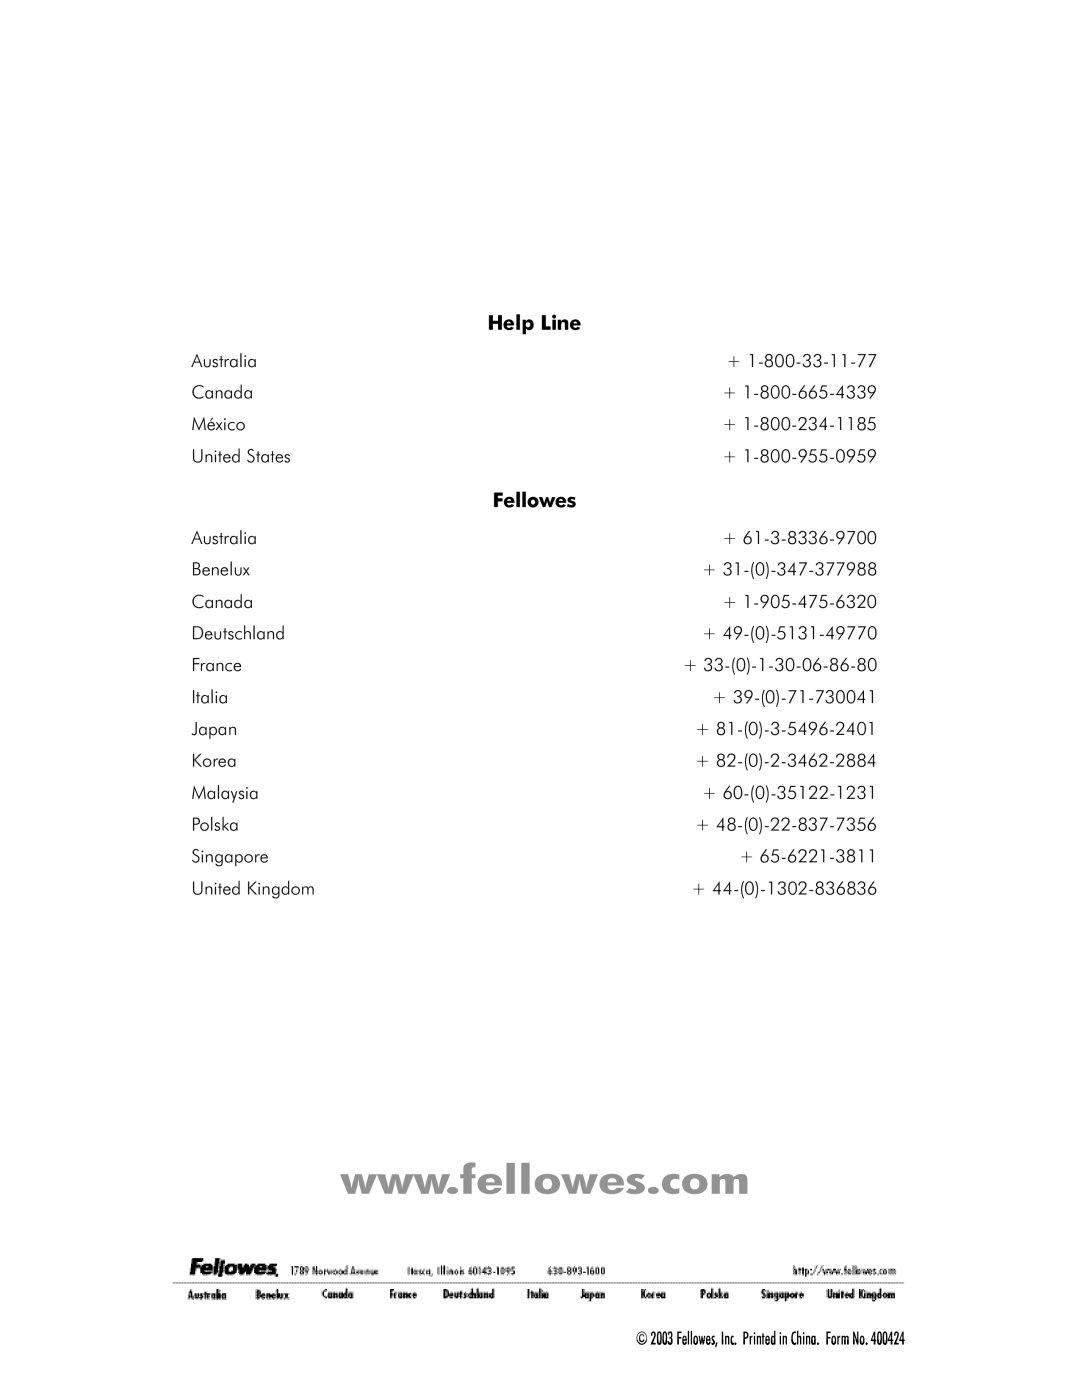 Fellowes WB 150 manual Help Line 